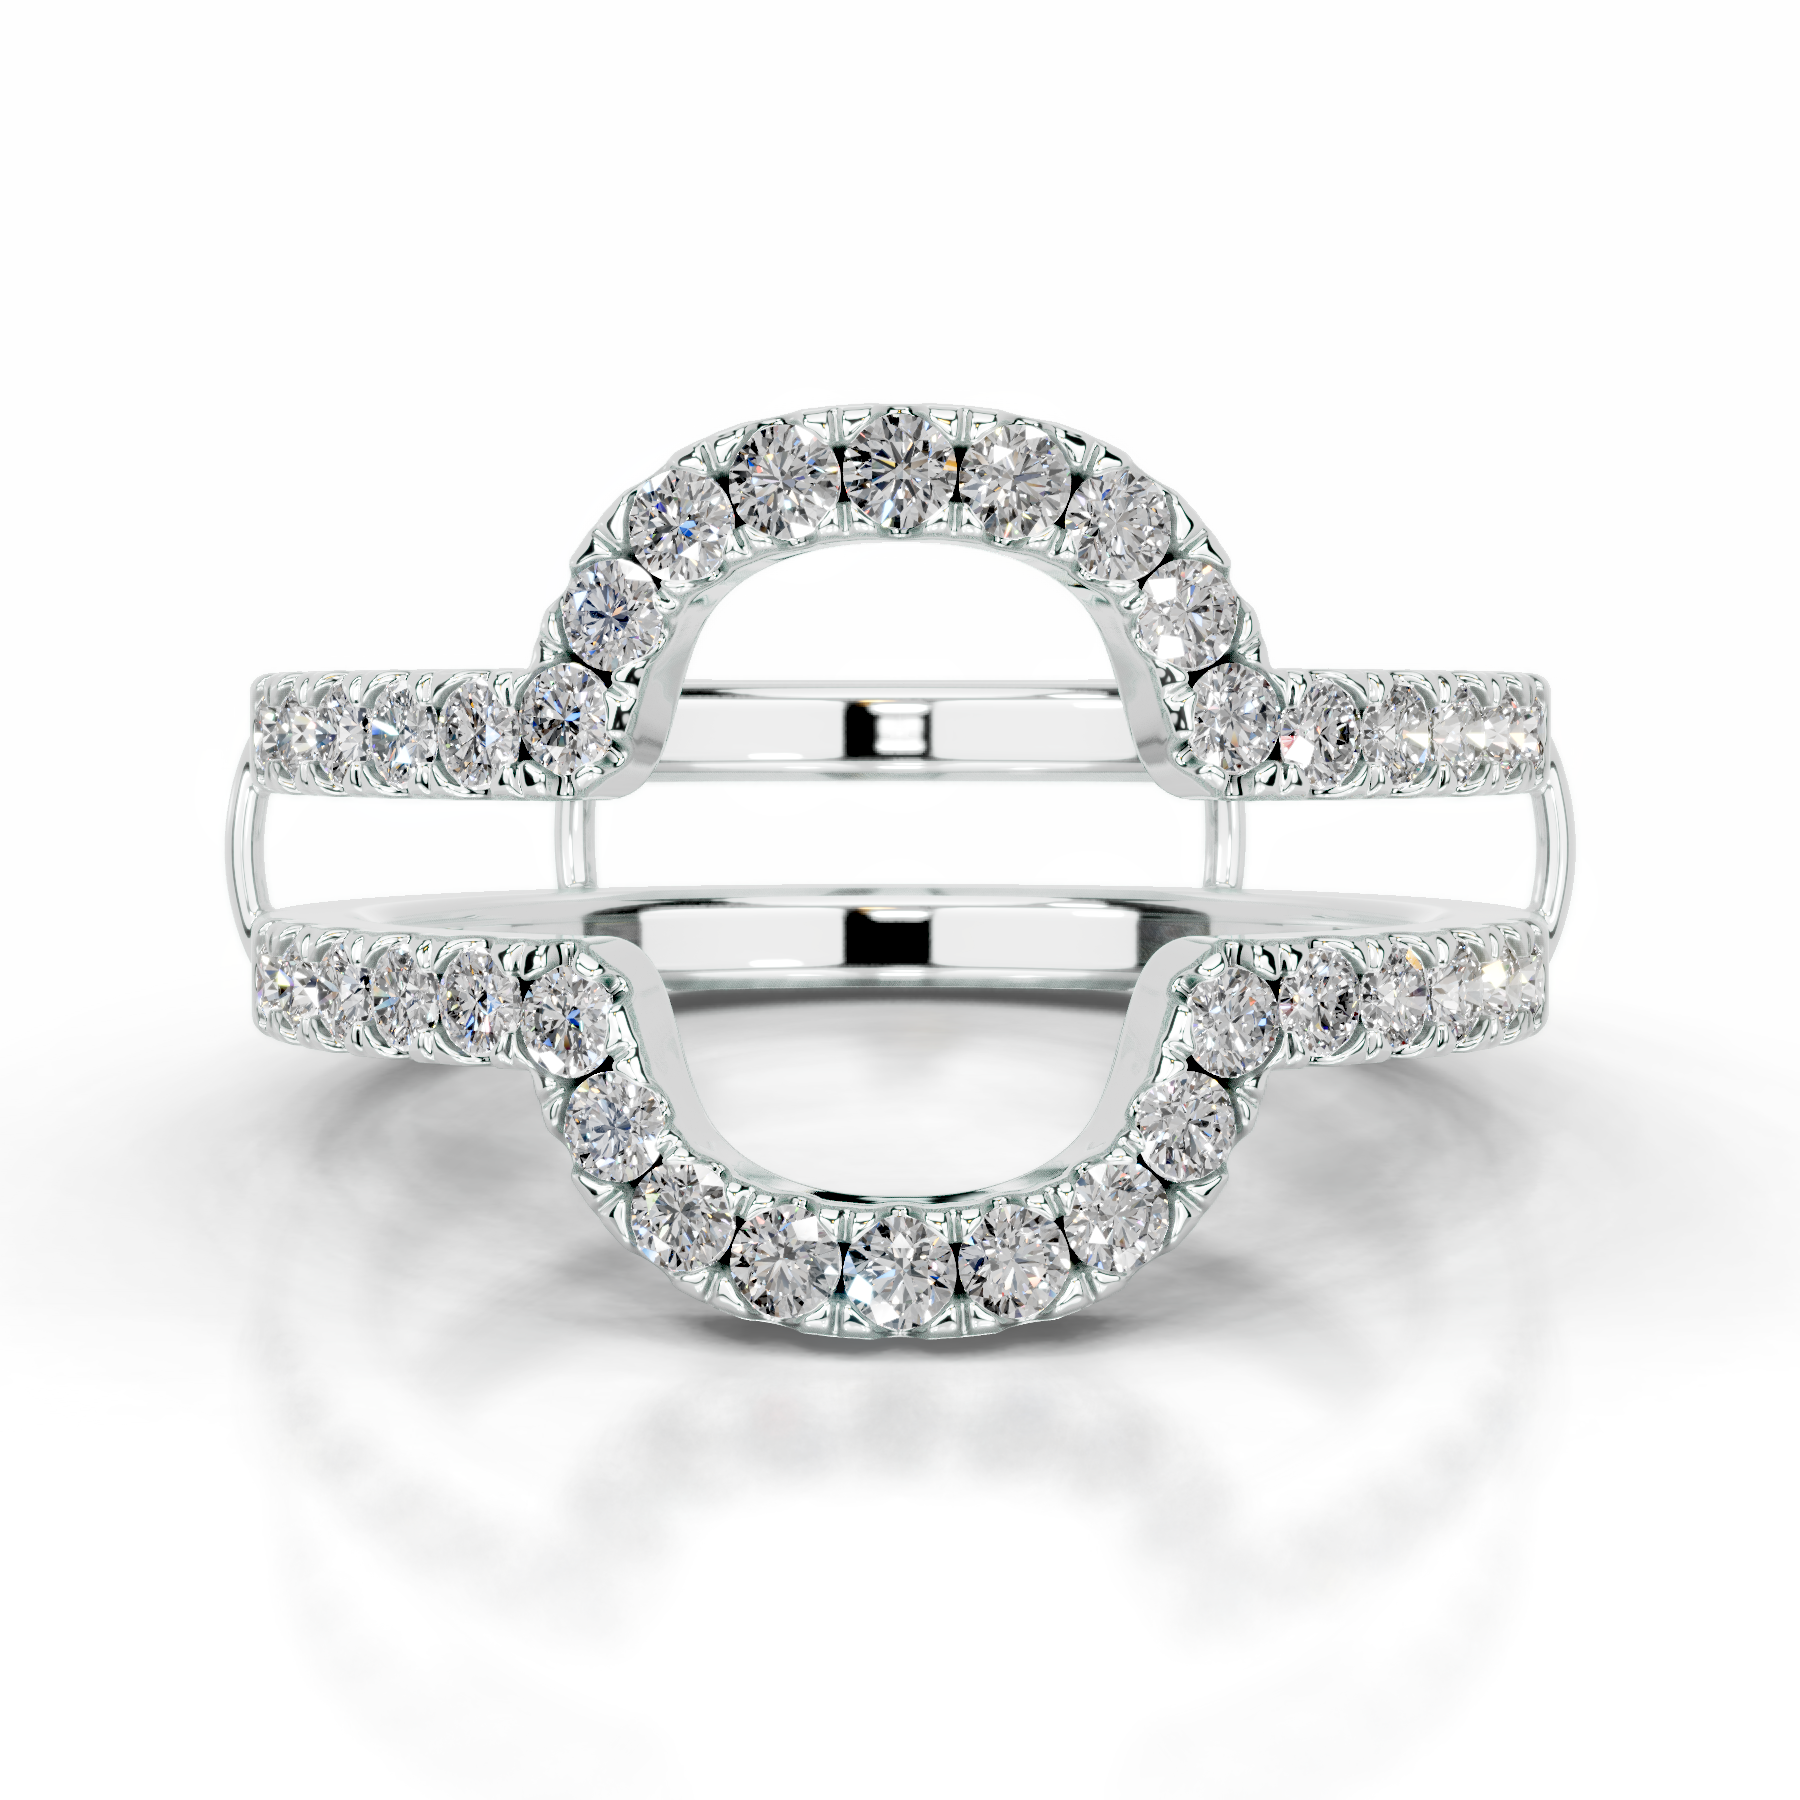 Yana Diamond Wedding Ring   (0.50 Carat) -14K White Gold